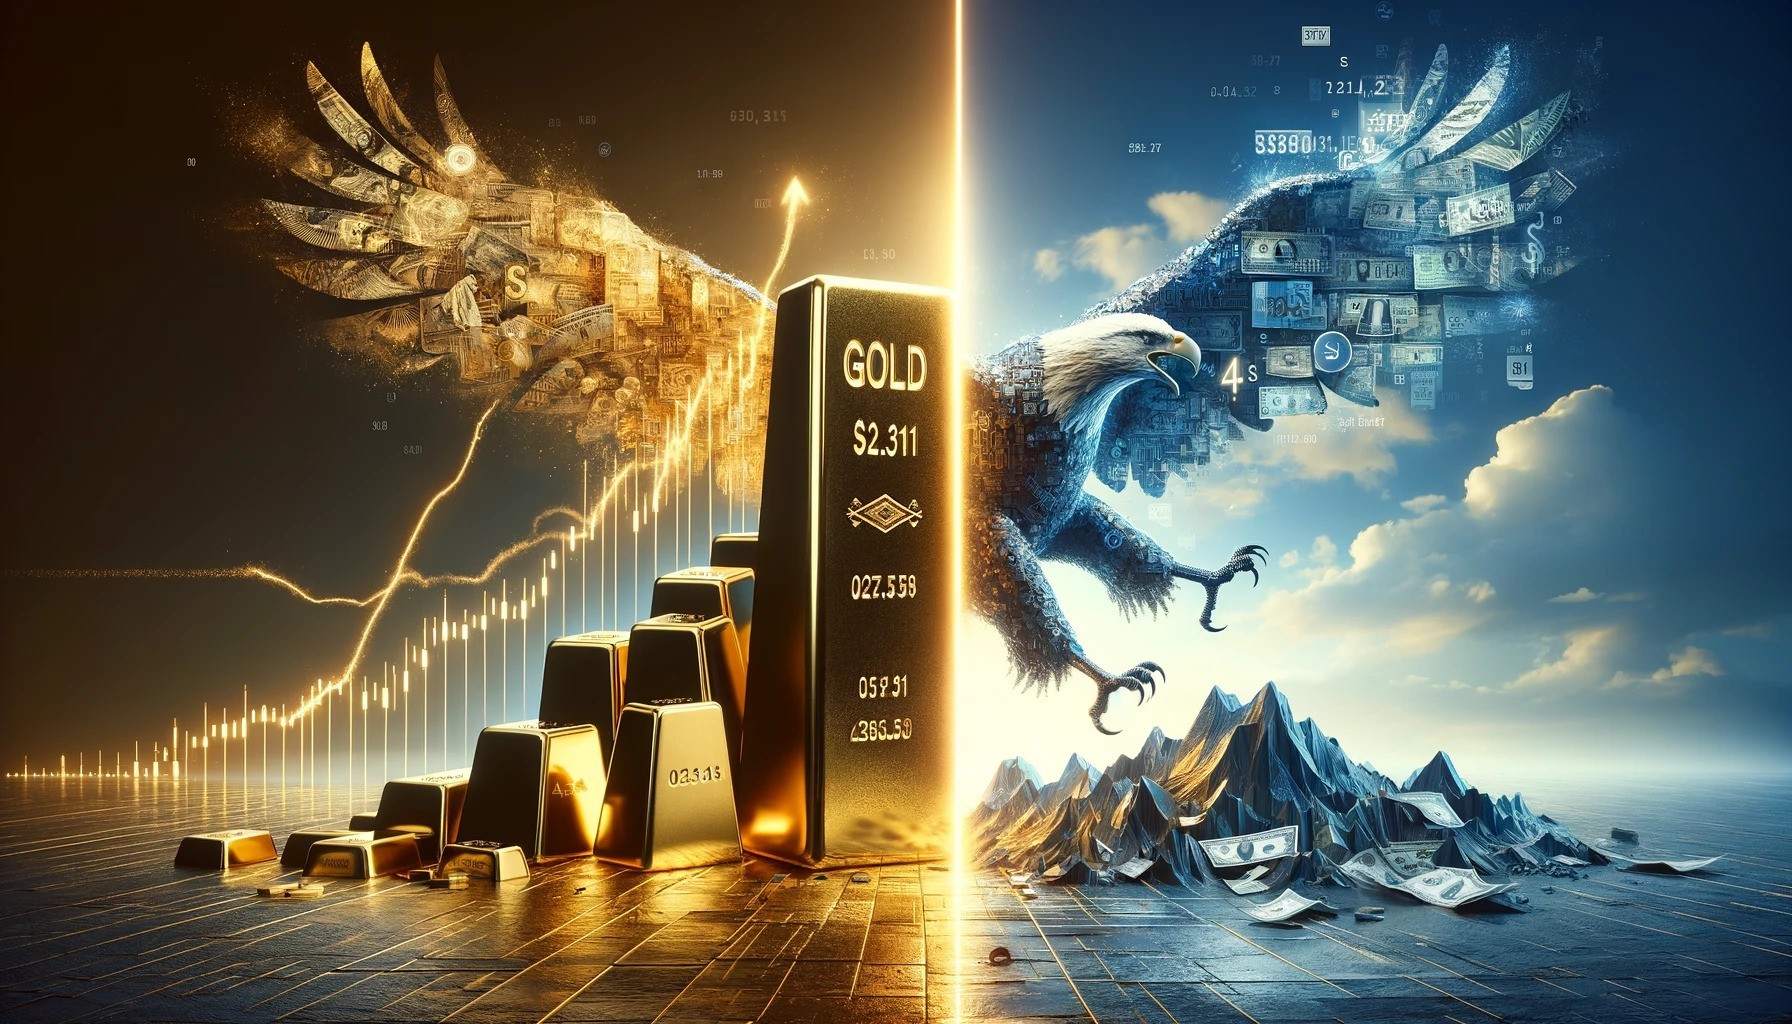 Investors Don’t Believe the Gold Rally, Still Prefer General Stocks